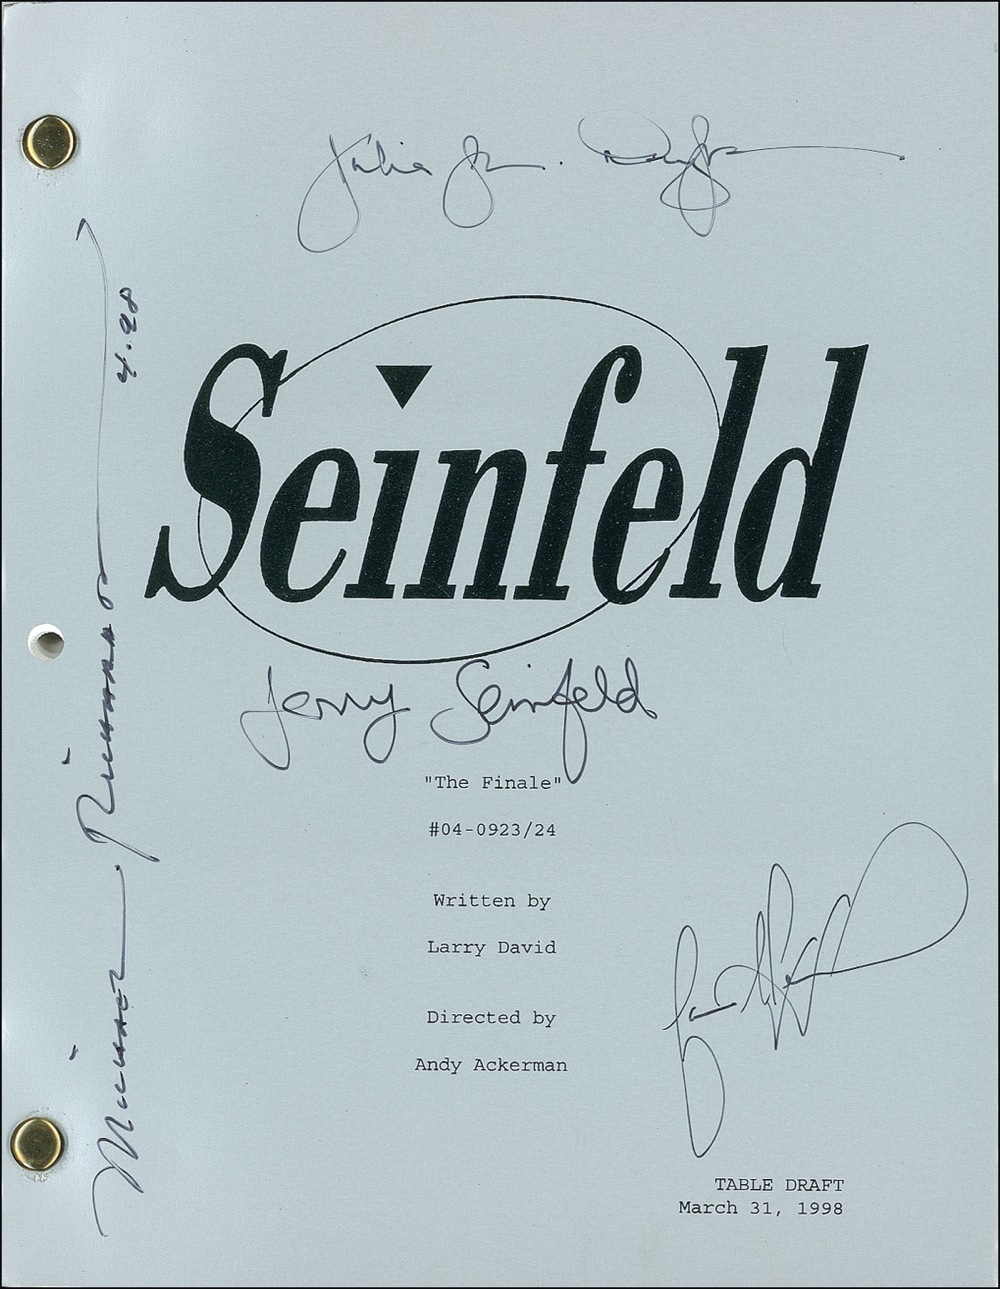 Lot #1320 Seinfeld